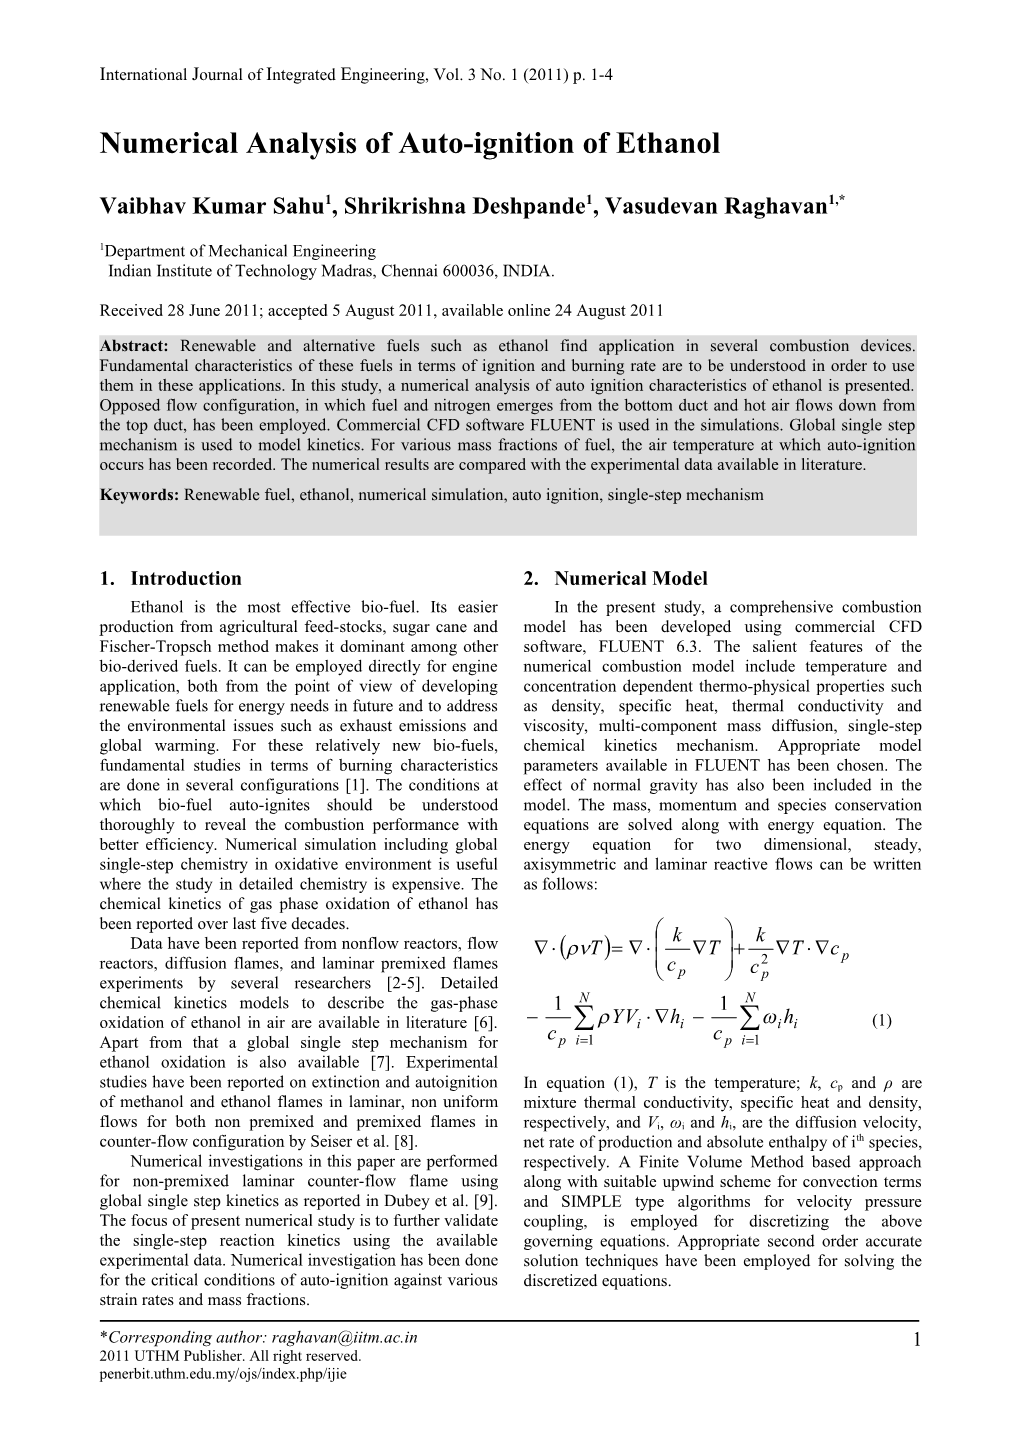 Numerical Analysis of Auto-Ignition of Ethanol